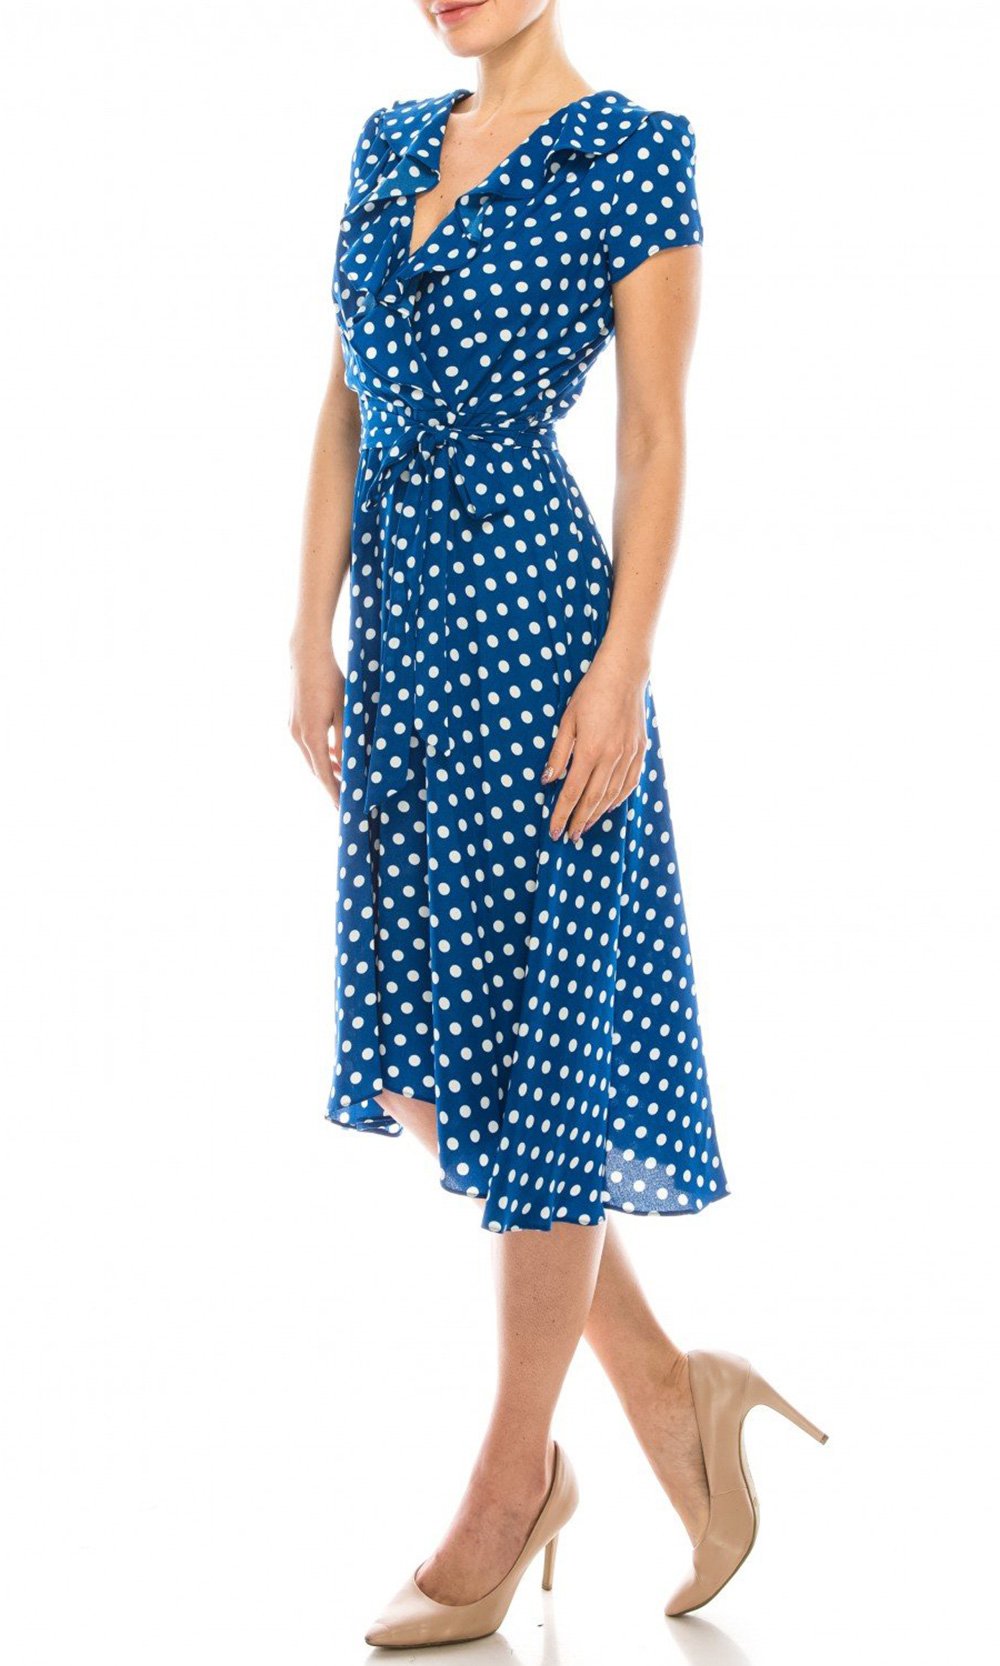 Gabby Skye - 57538MG Polka Dot Ruffle Neckline Faux Wrap Dress In Blue and White